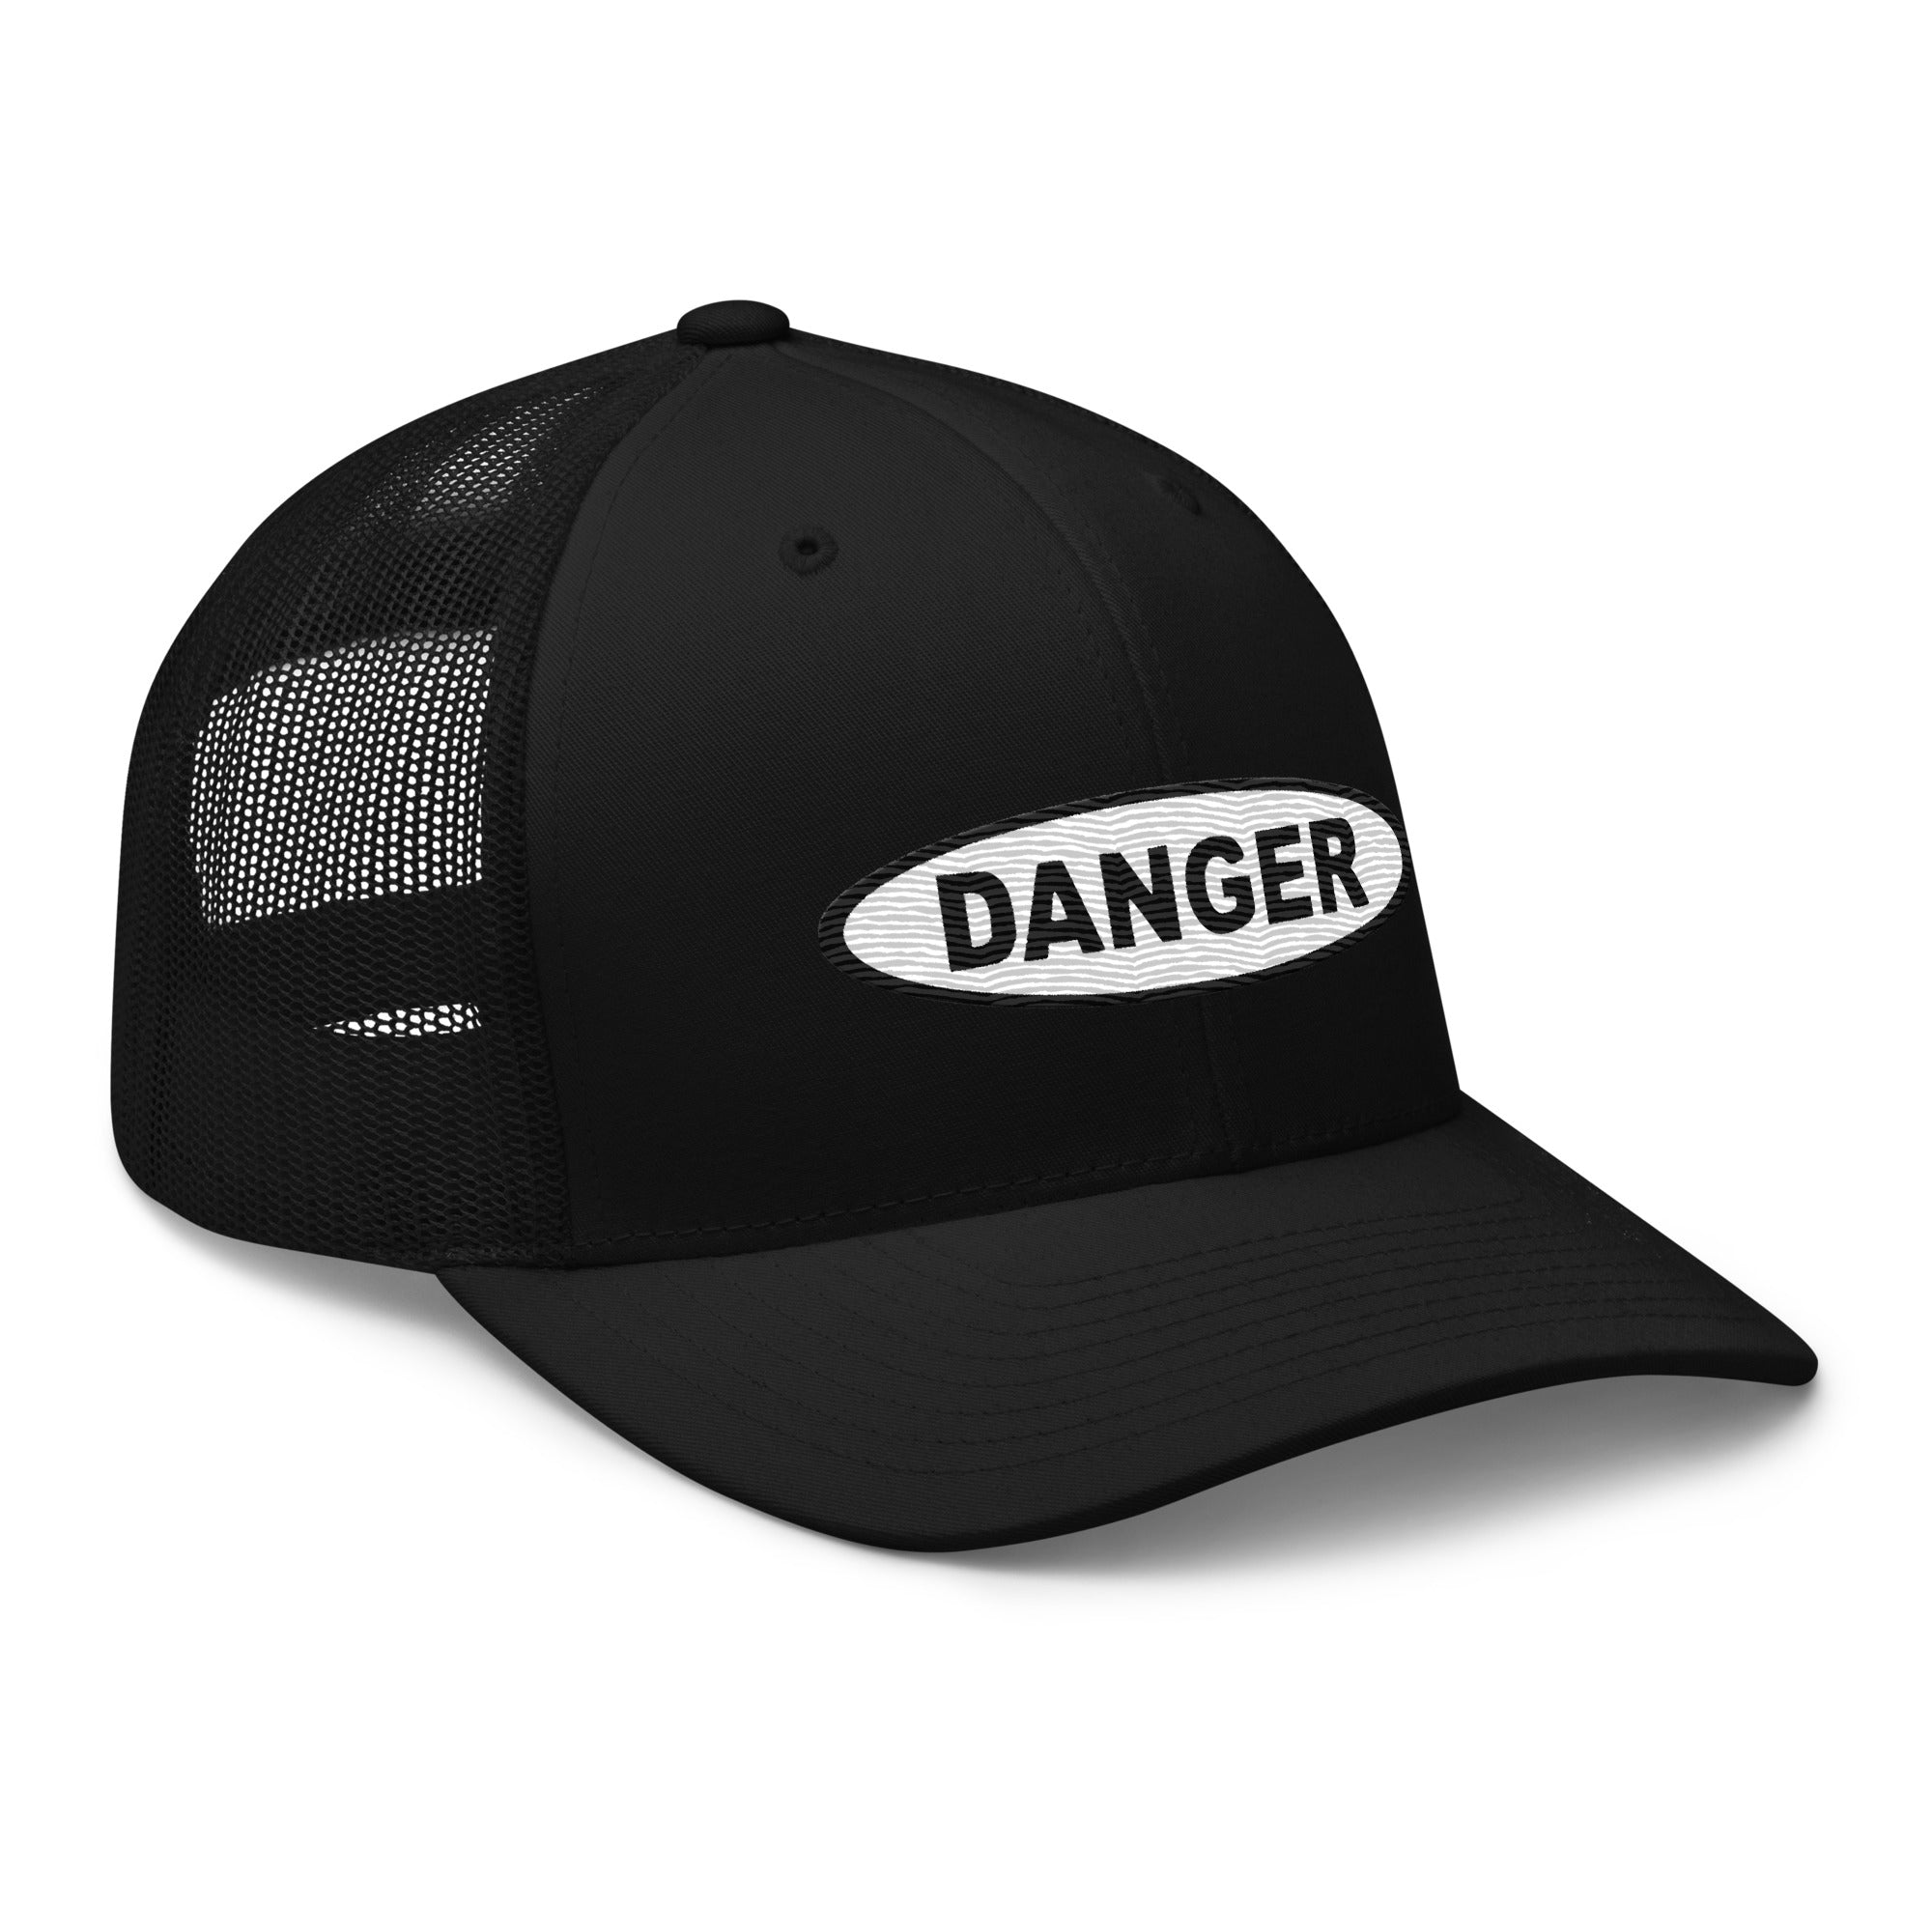 White Danger Warning Sign Embroidered Retro Trucker Cap Snapback Hat